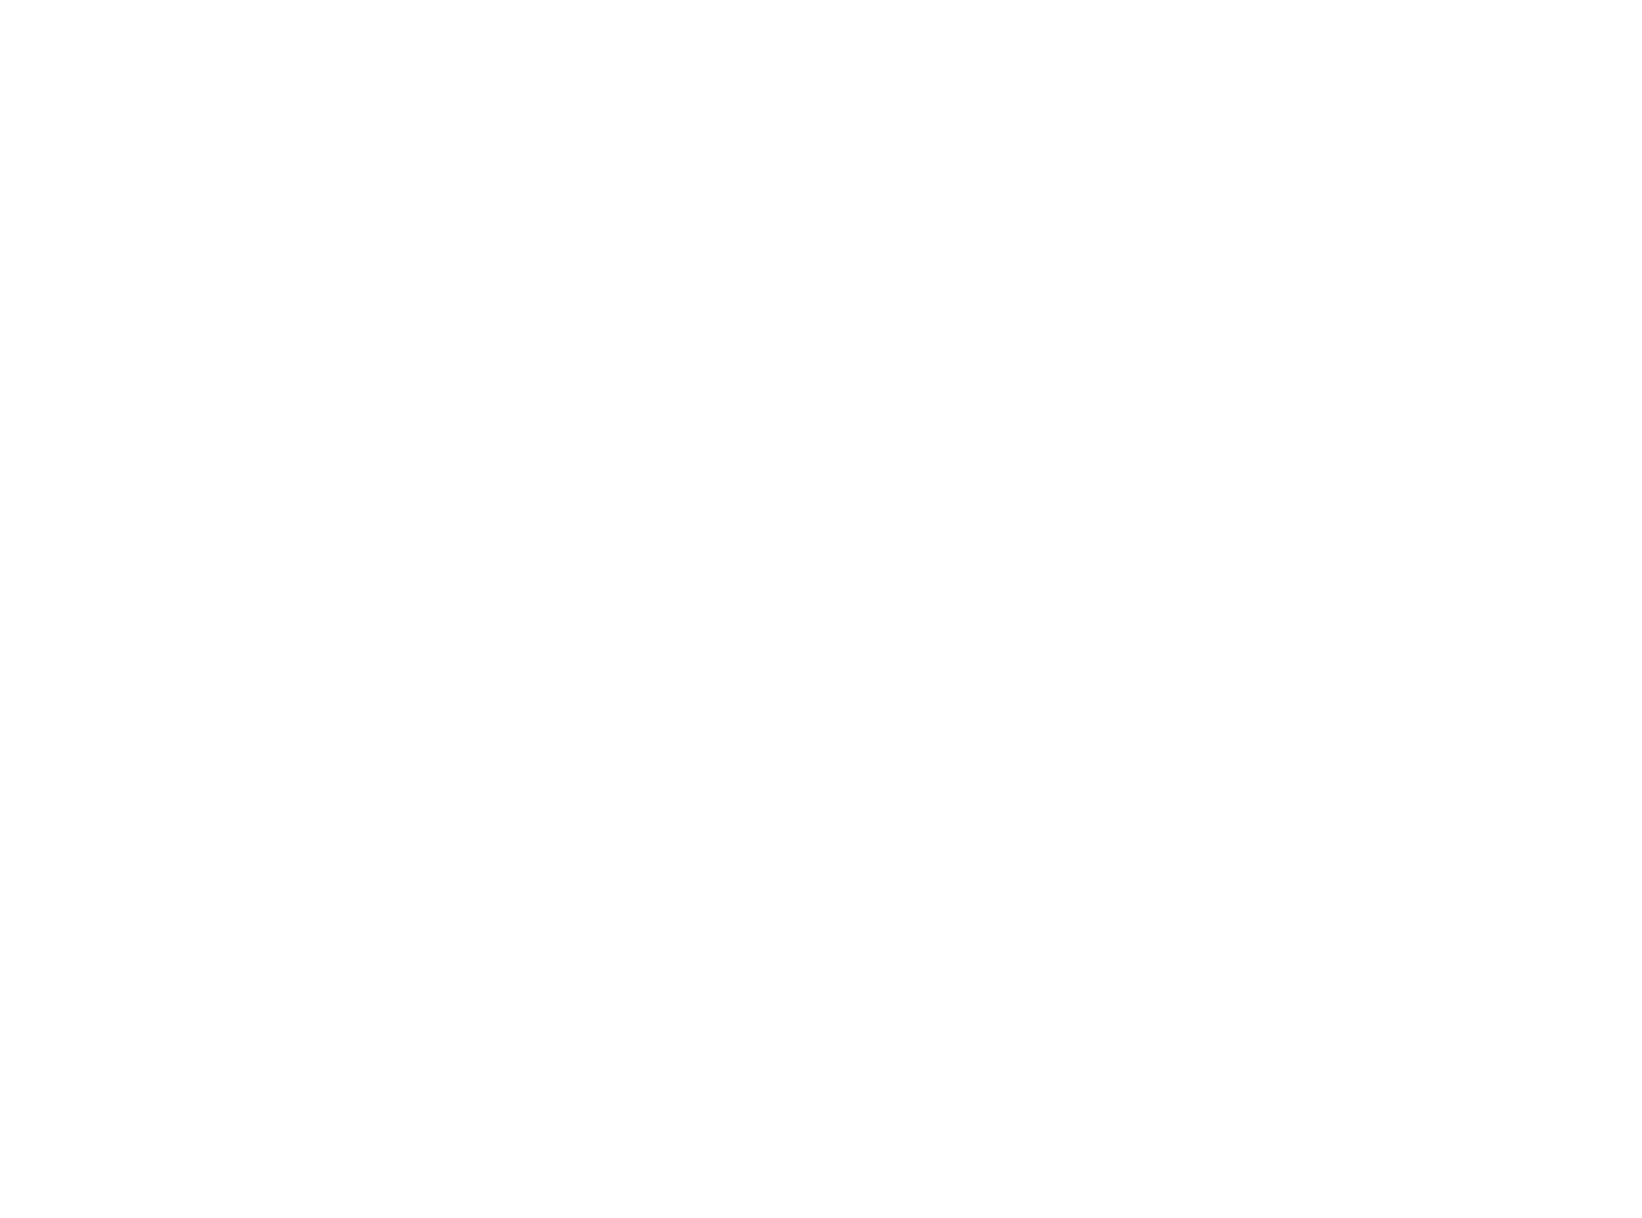 Pay wit logo